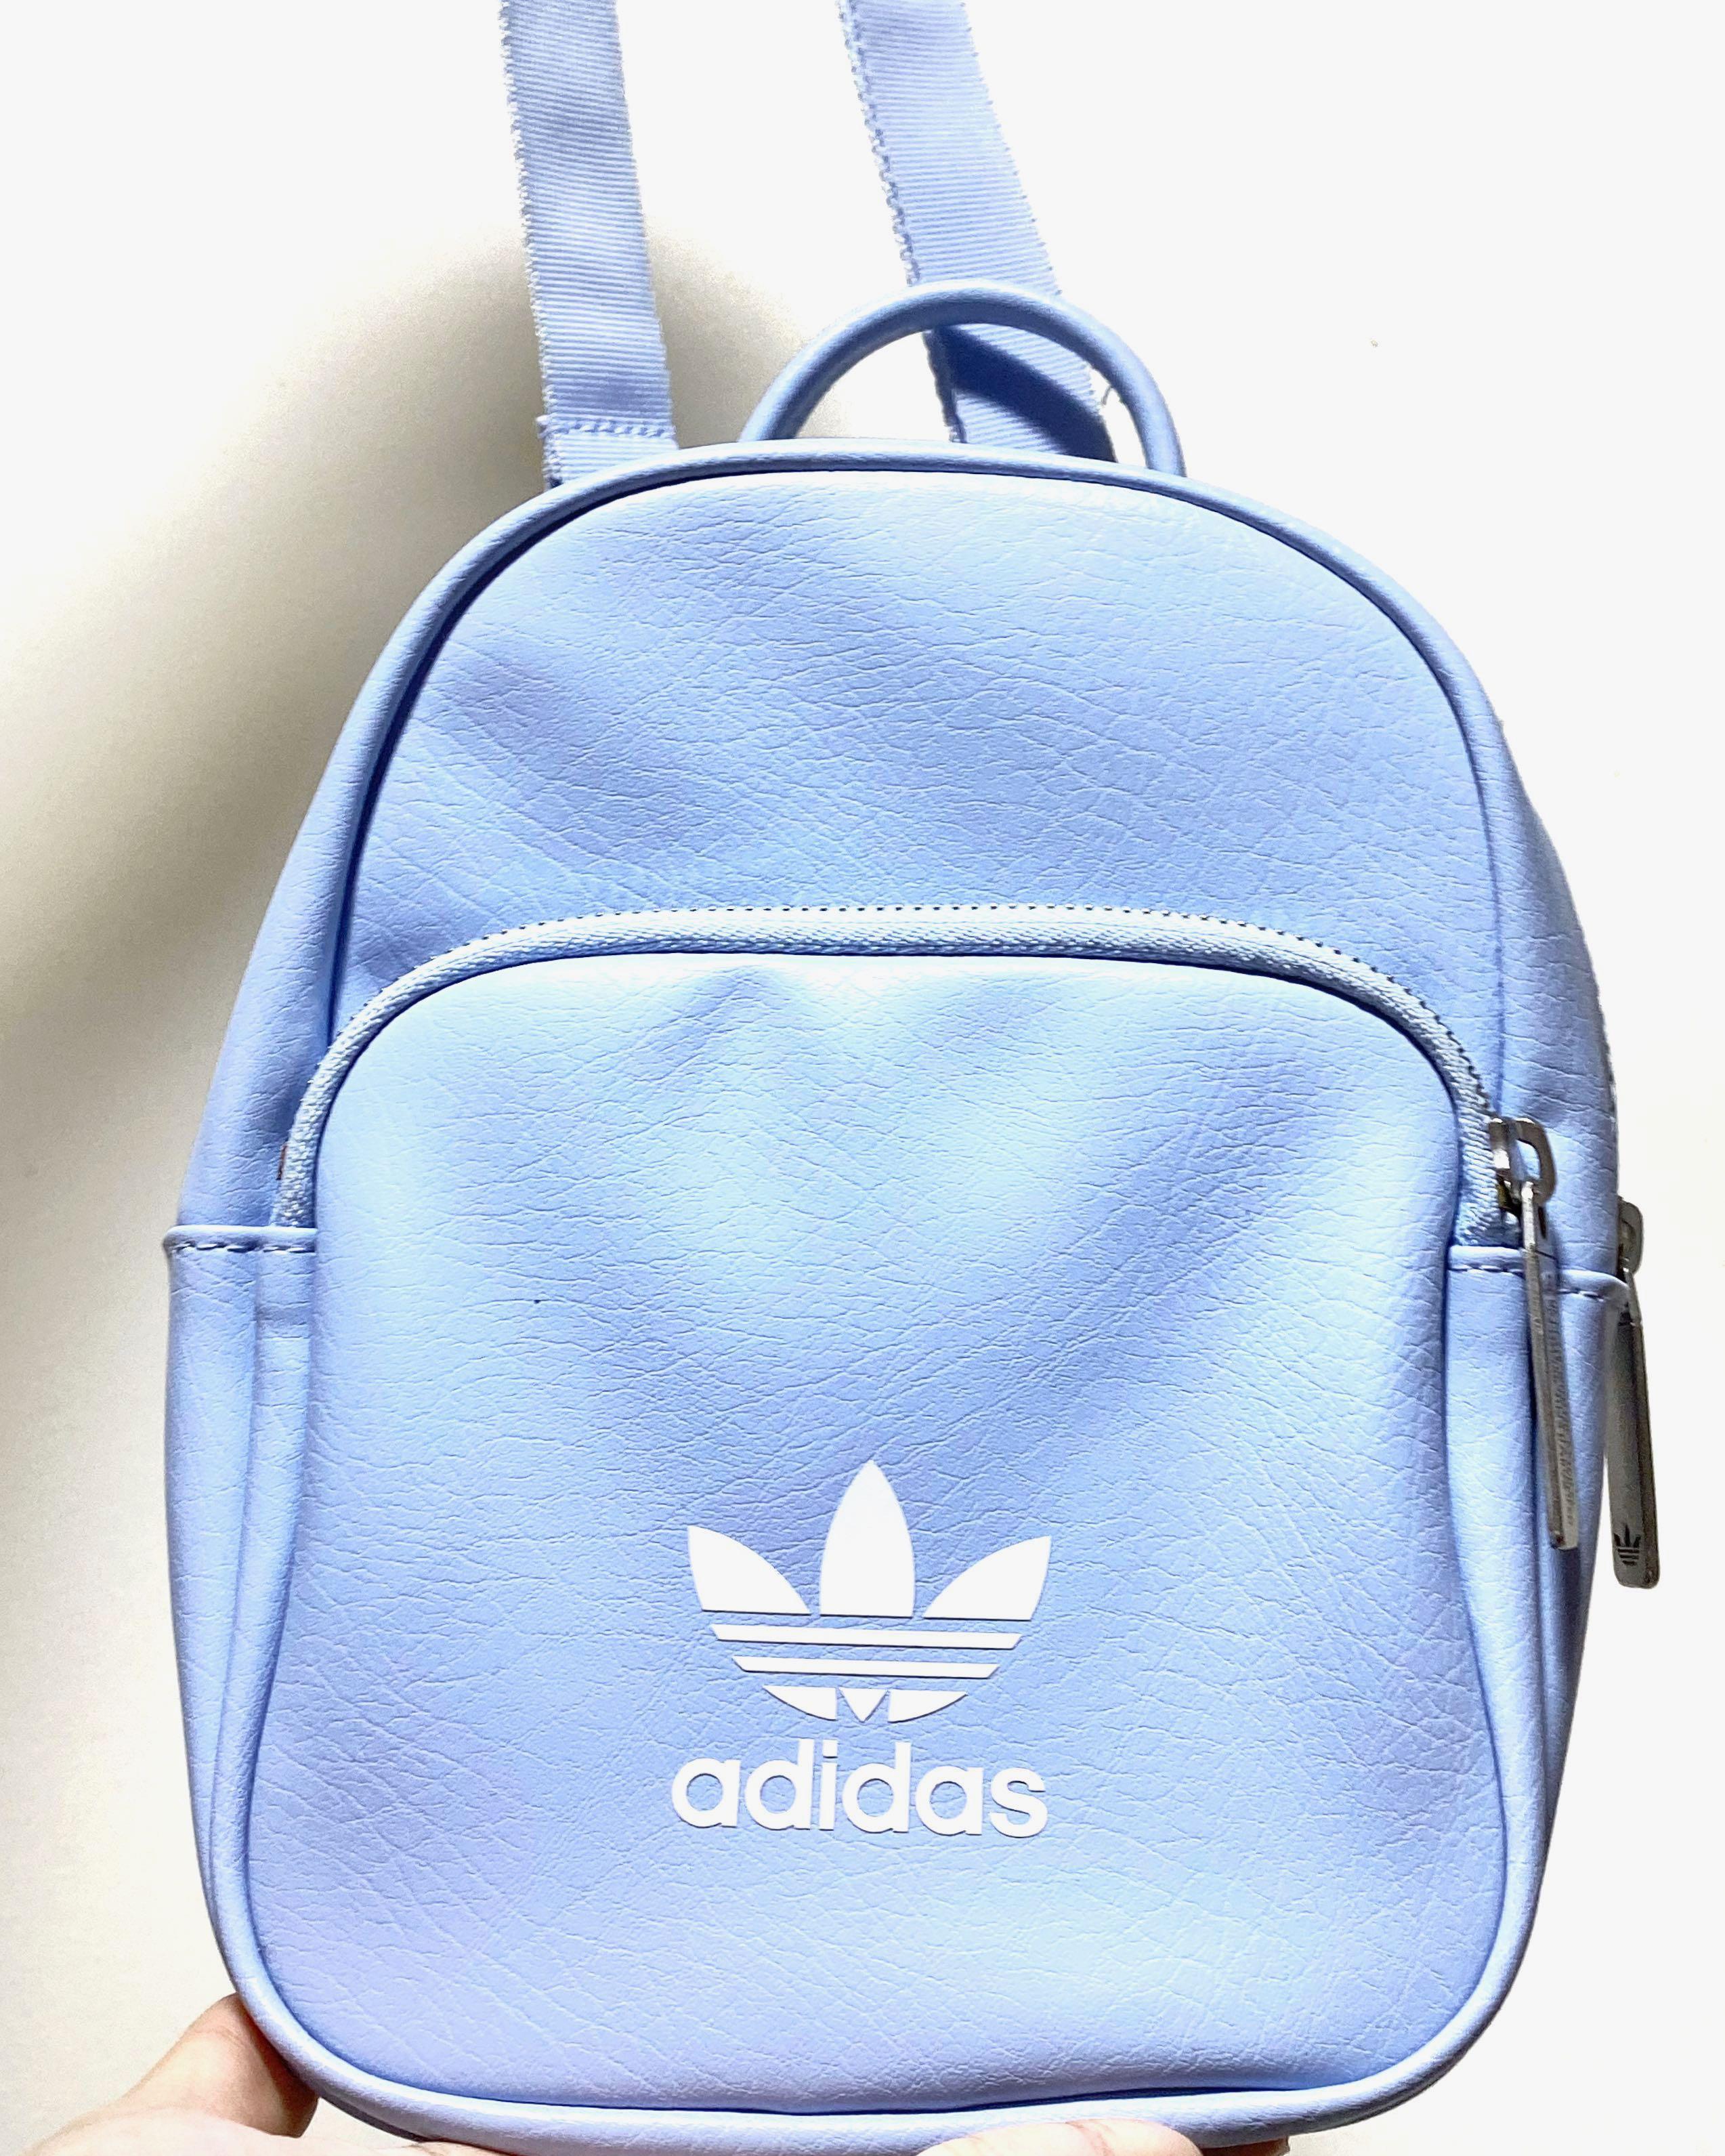 adidas backpack light blue